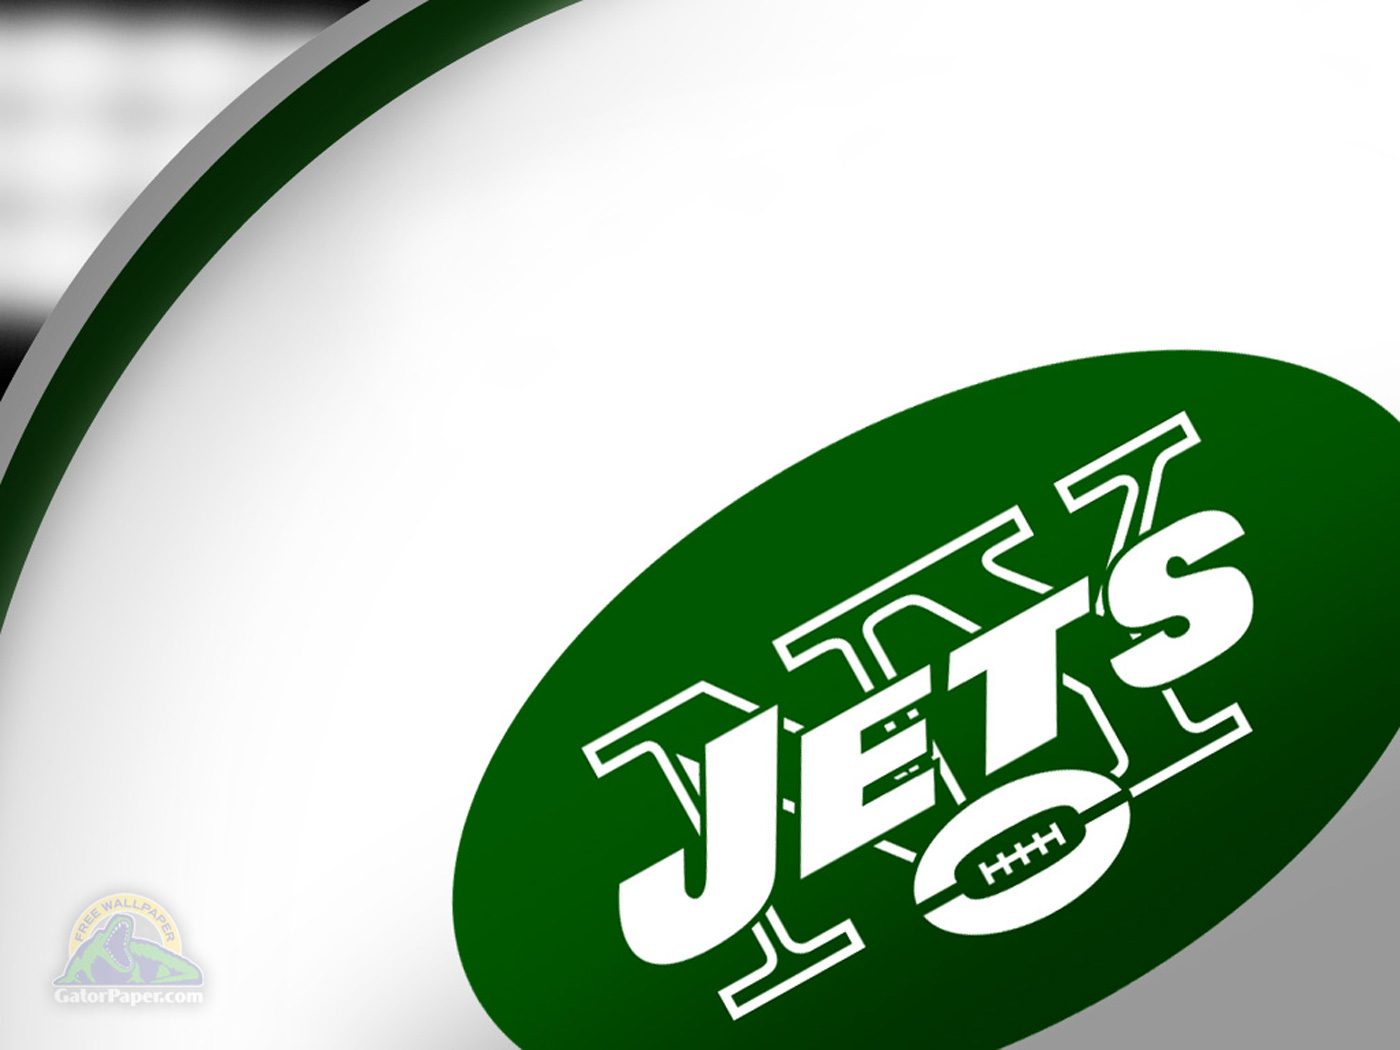 New York Jets Helmet Gatorpaper Sports Desktop Wallpaper